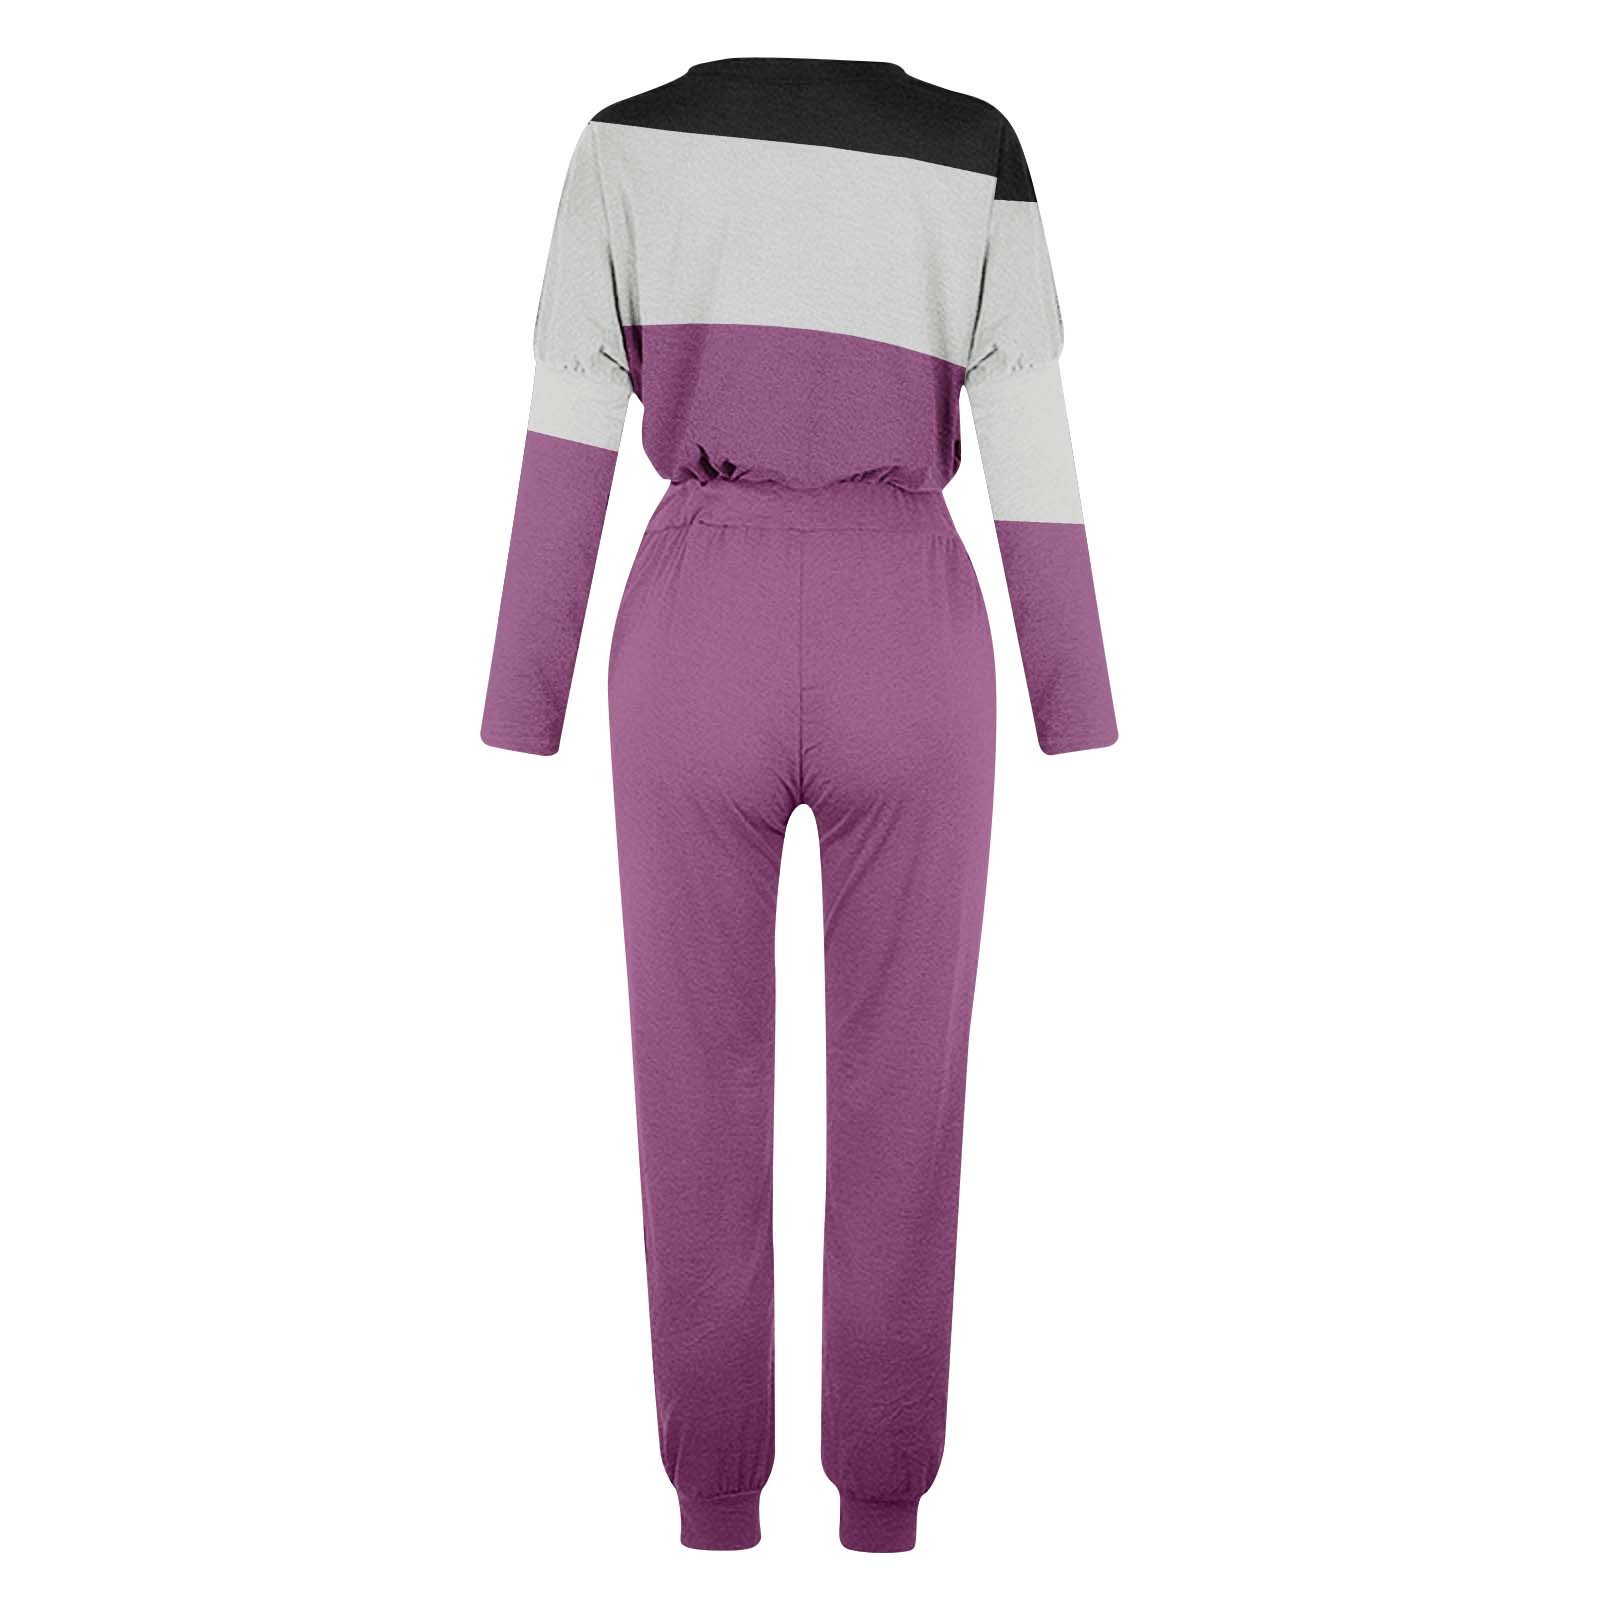 absuyy Women Sweatsuits 2pcs Sets To resist cold Sets Leisure Fashion ...